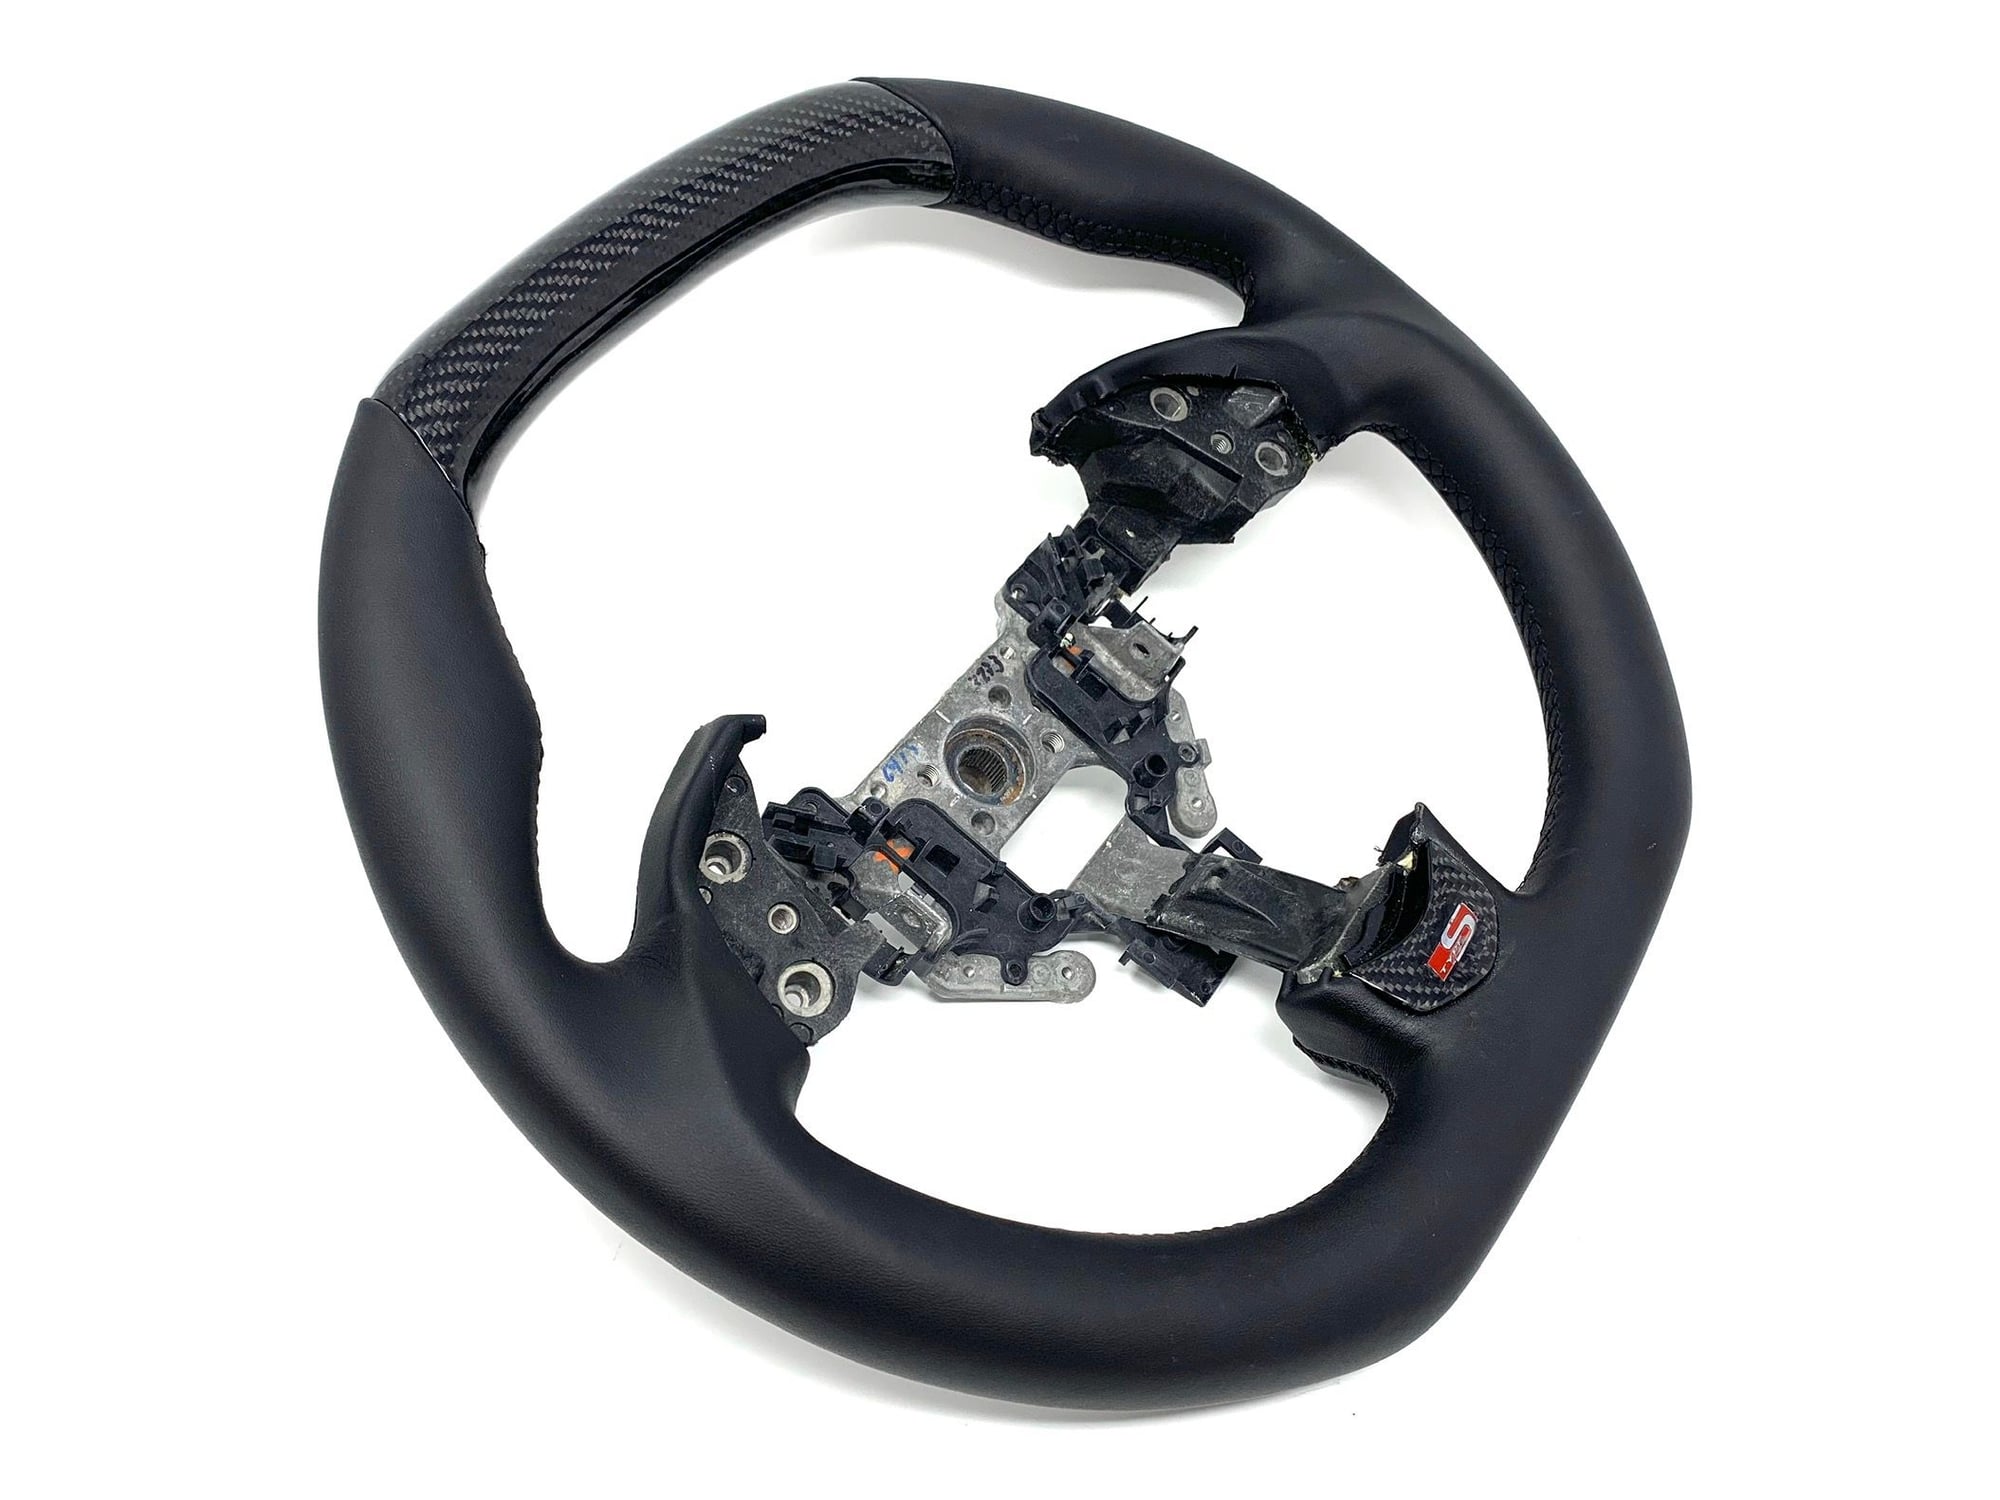 Interior/Upholstery - SOLD: 3rd Gen TL 3-Spoke Flat Top Flat Bottom Carbon Fiber Steering Wheel - New - 2004 to 2008 Acura TL - Cincinnati, OH 45205, United States